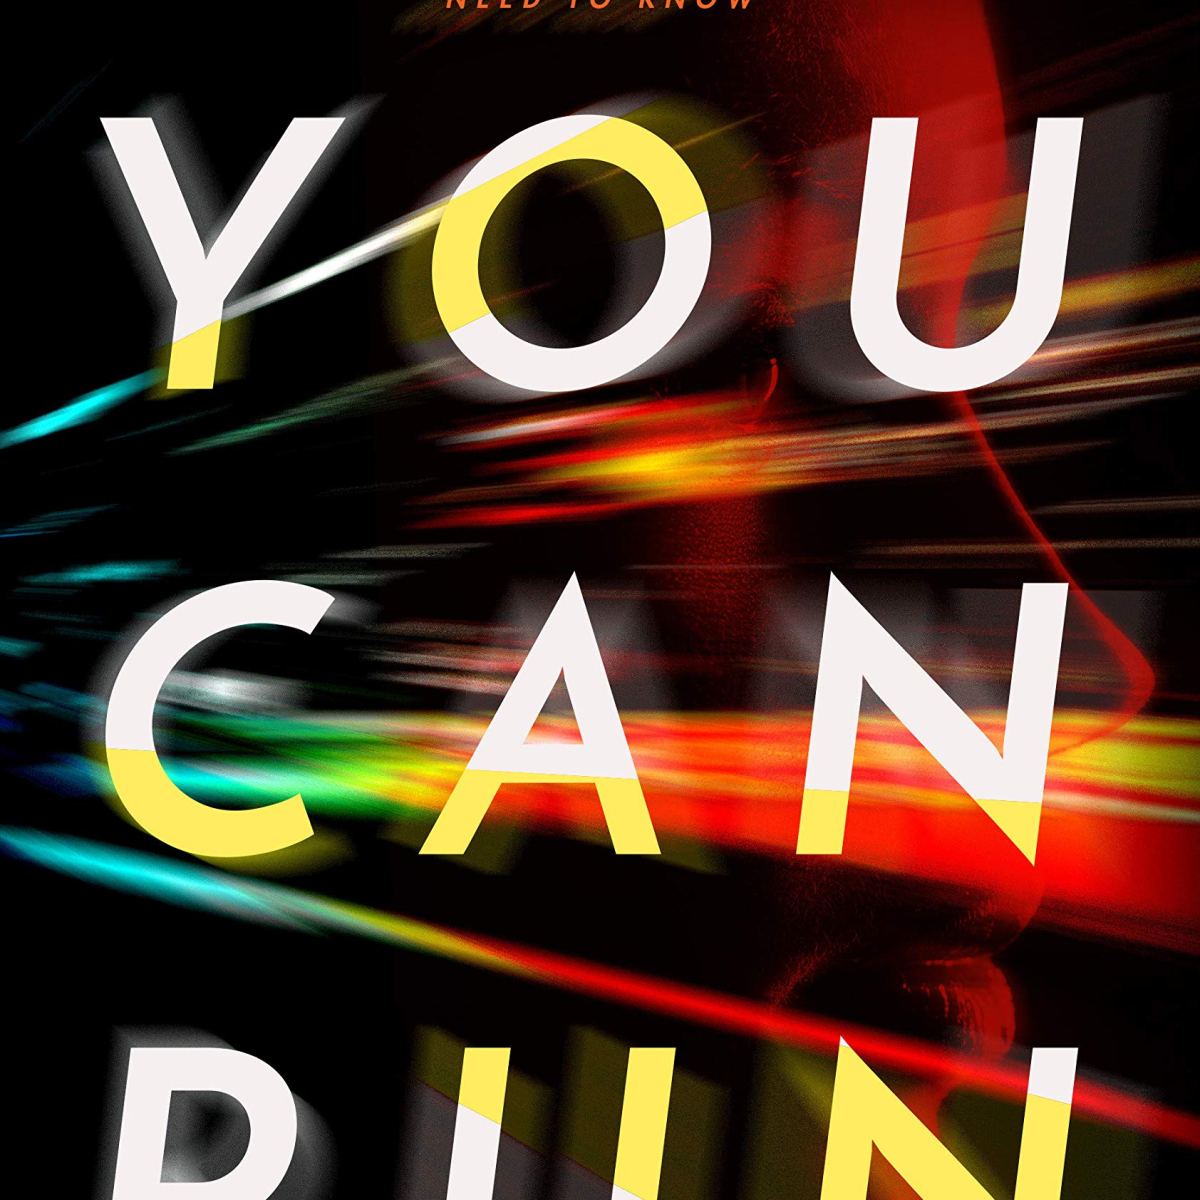 Book 166 – You Can Run by Karen Cleveland